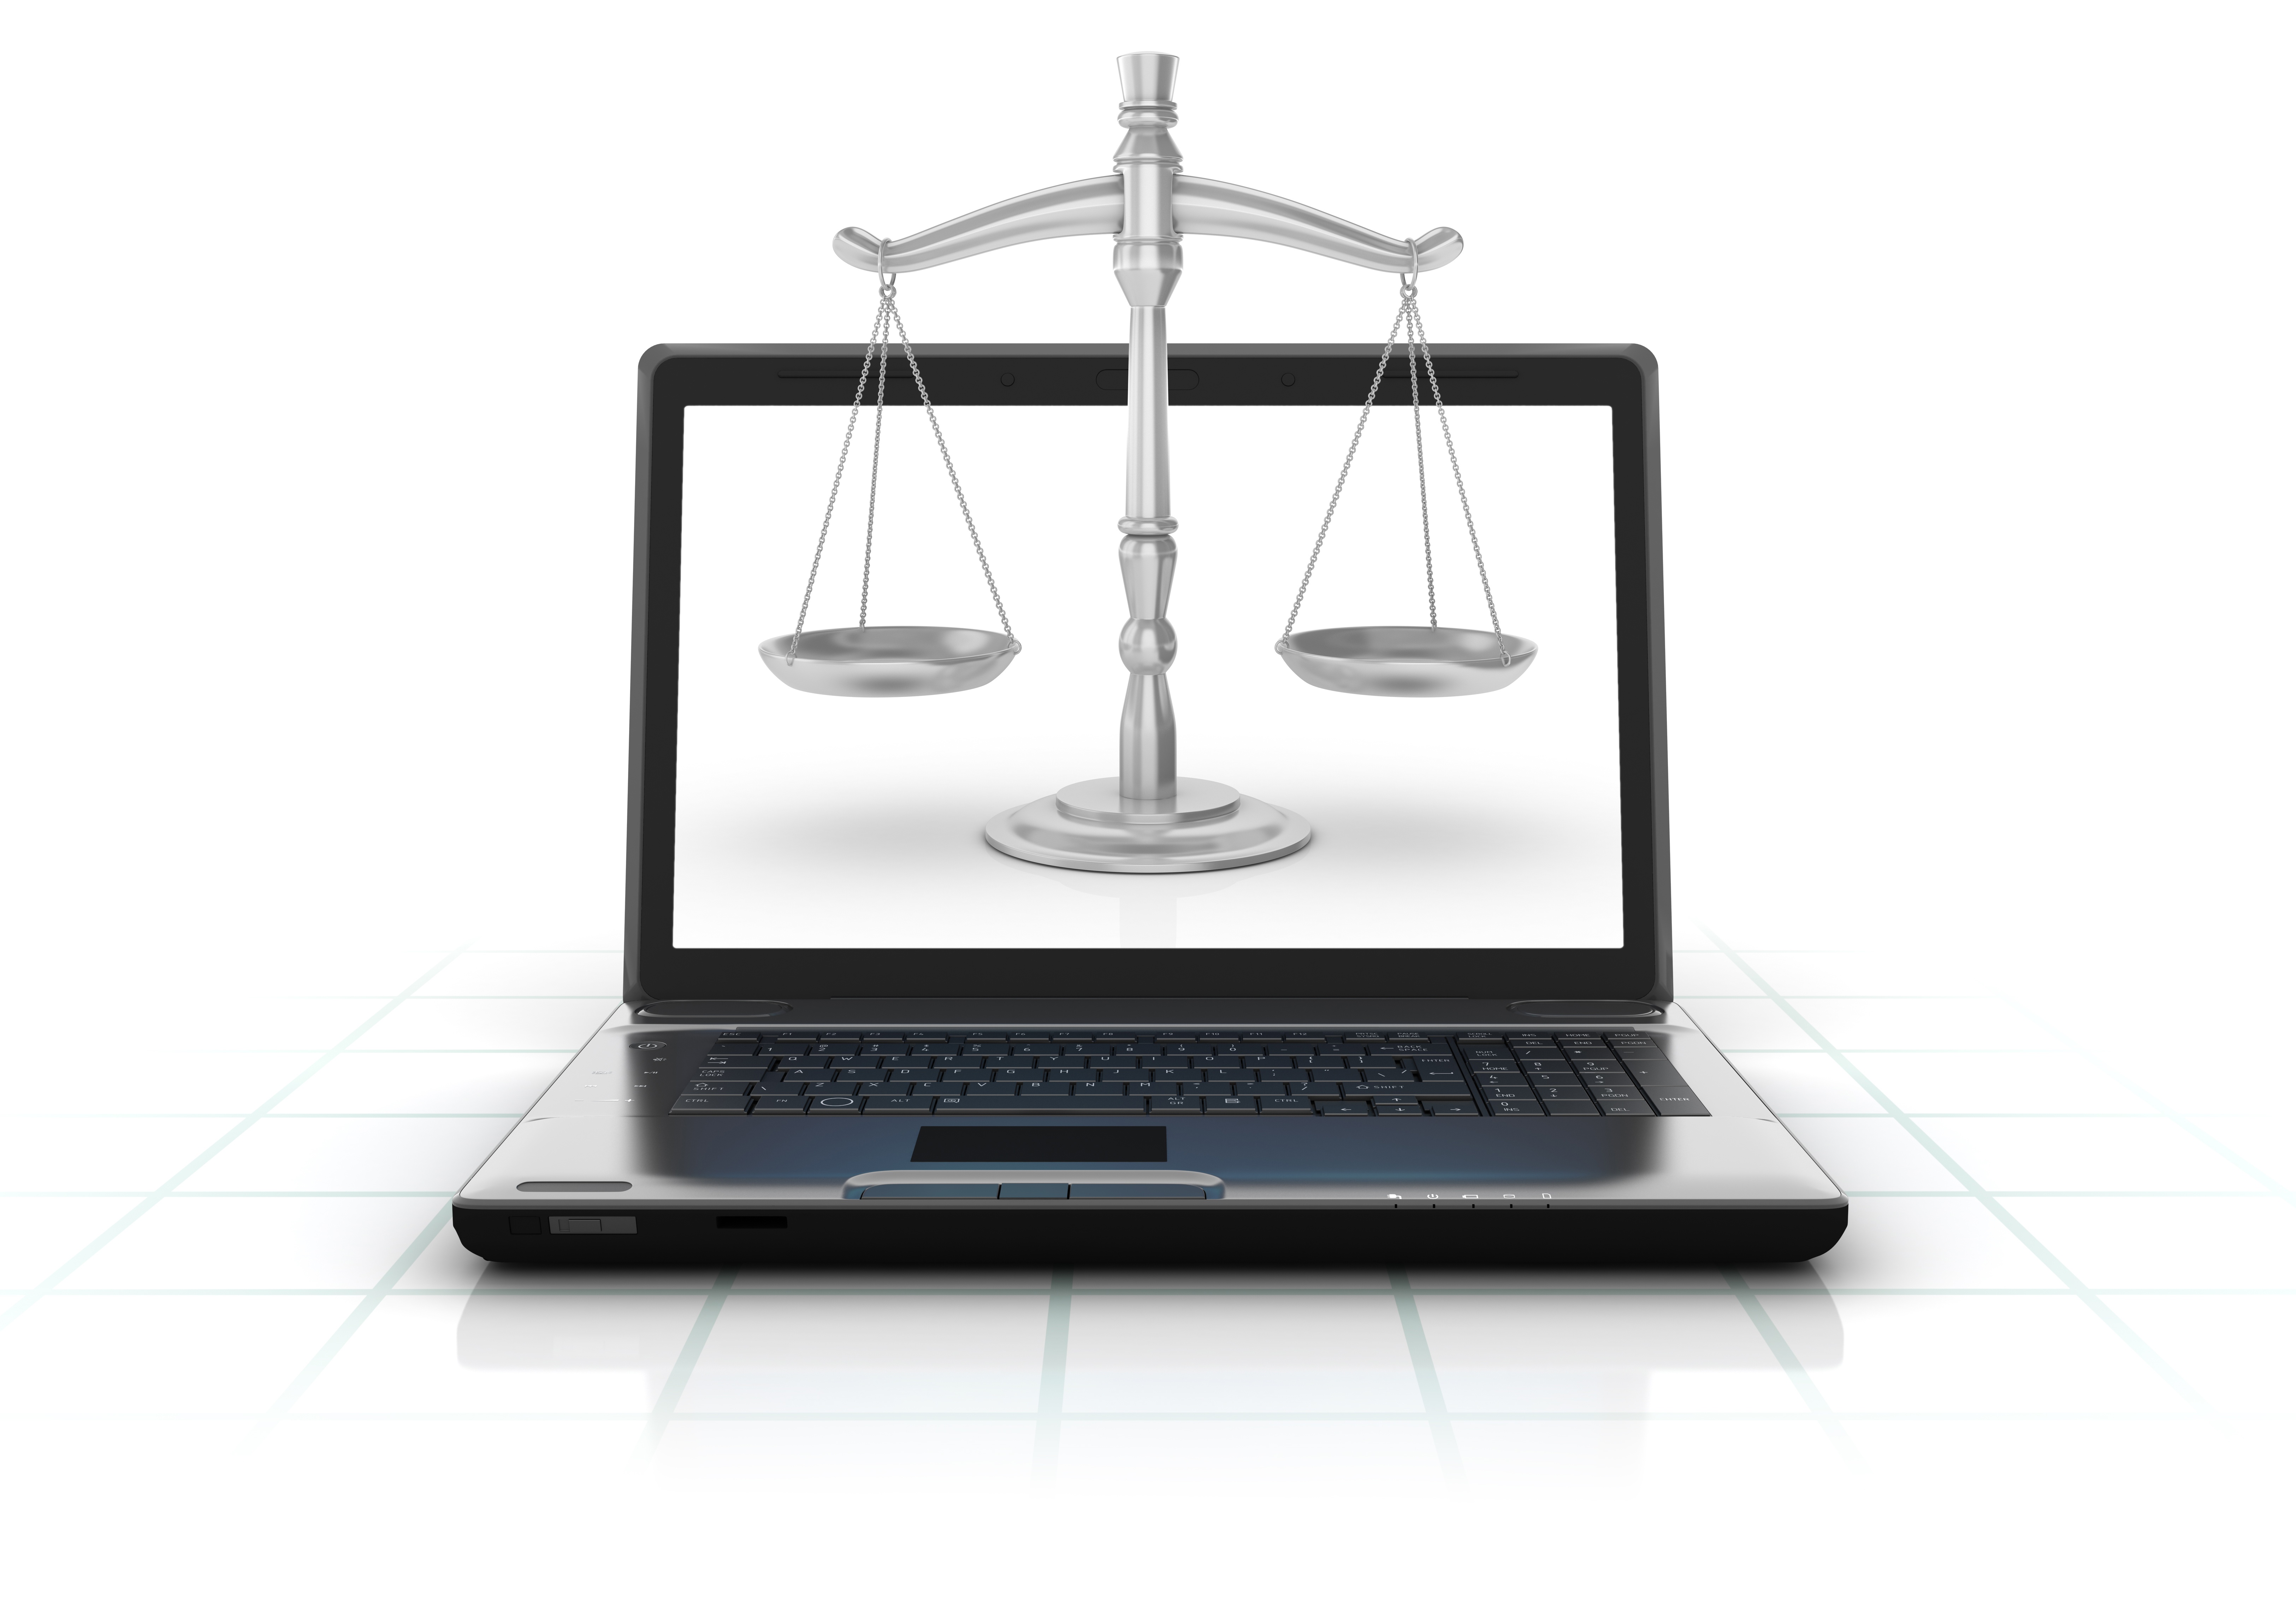 legal scales against a laptop